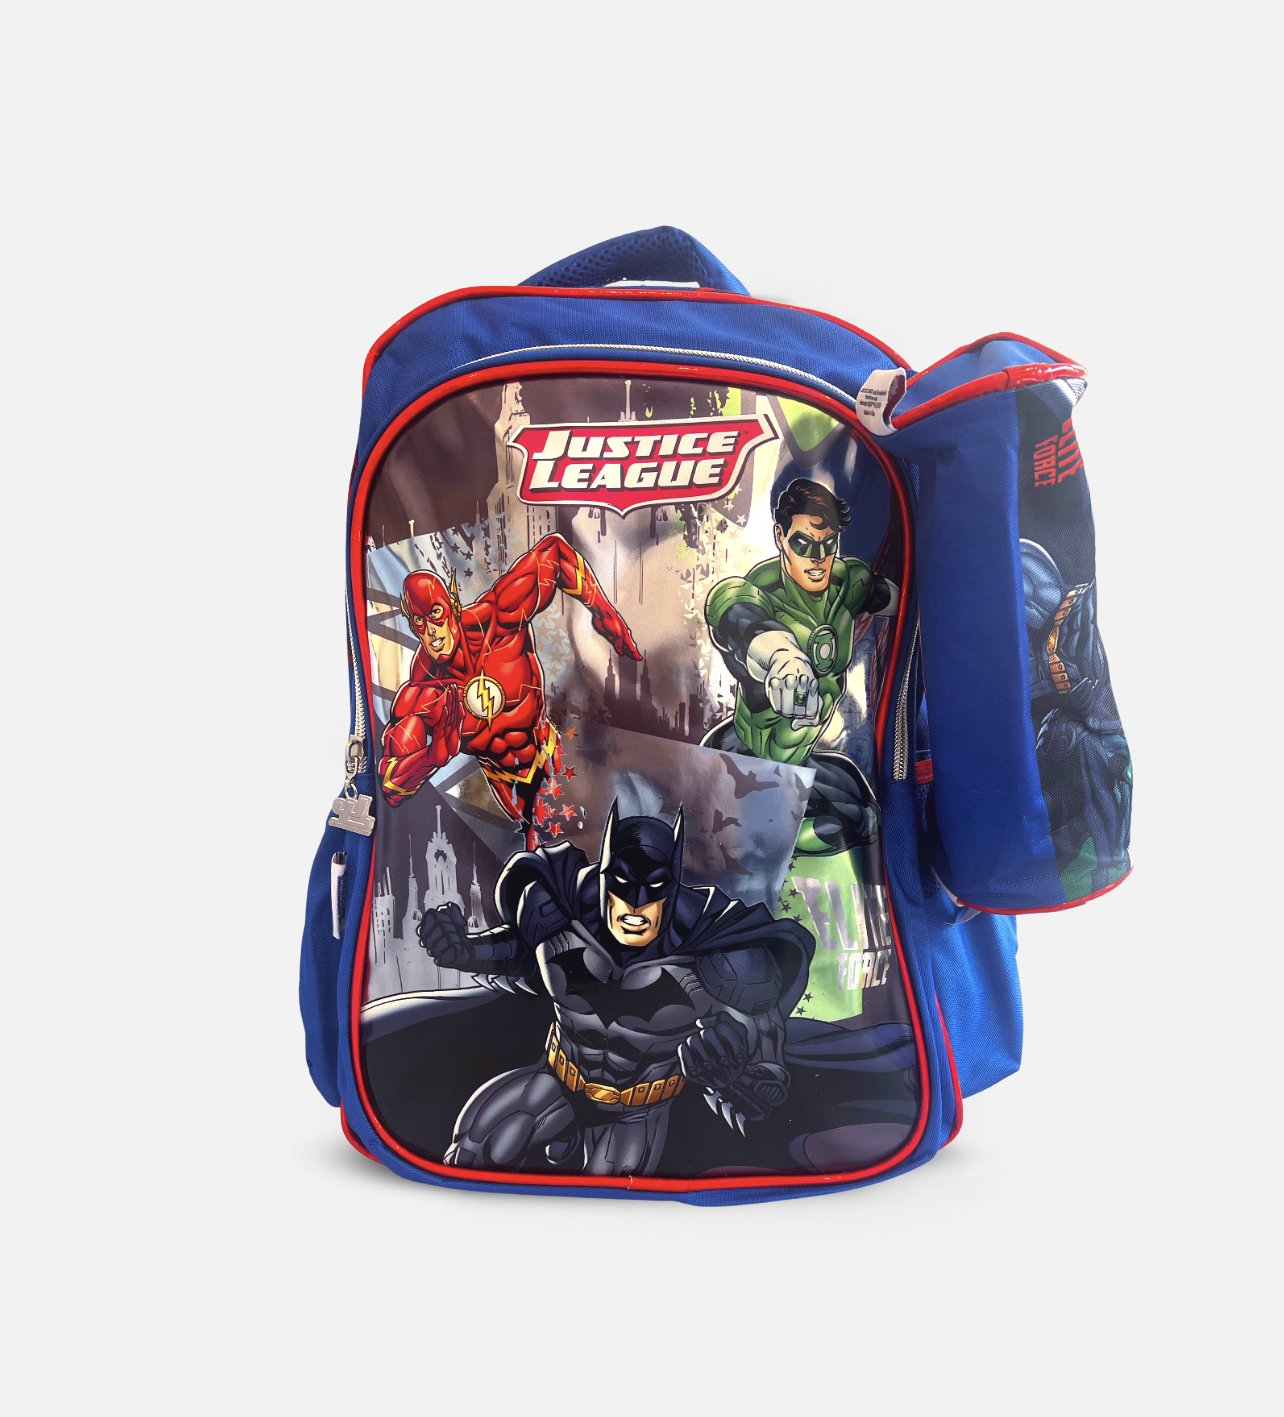 Justic league  backpack w pencil case